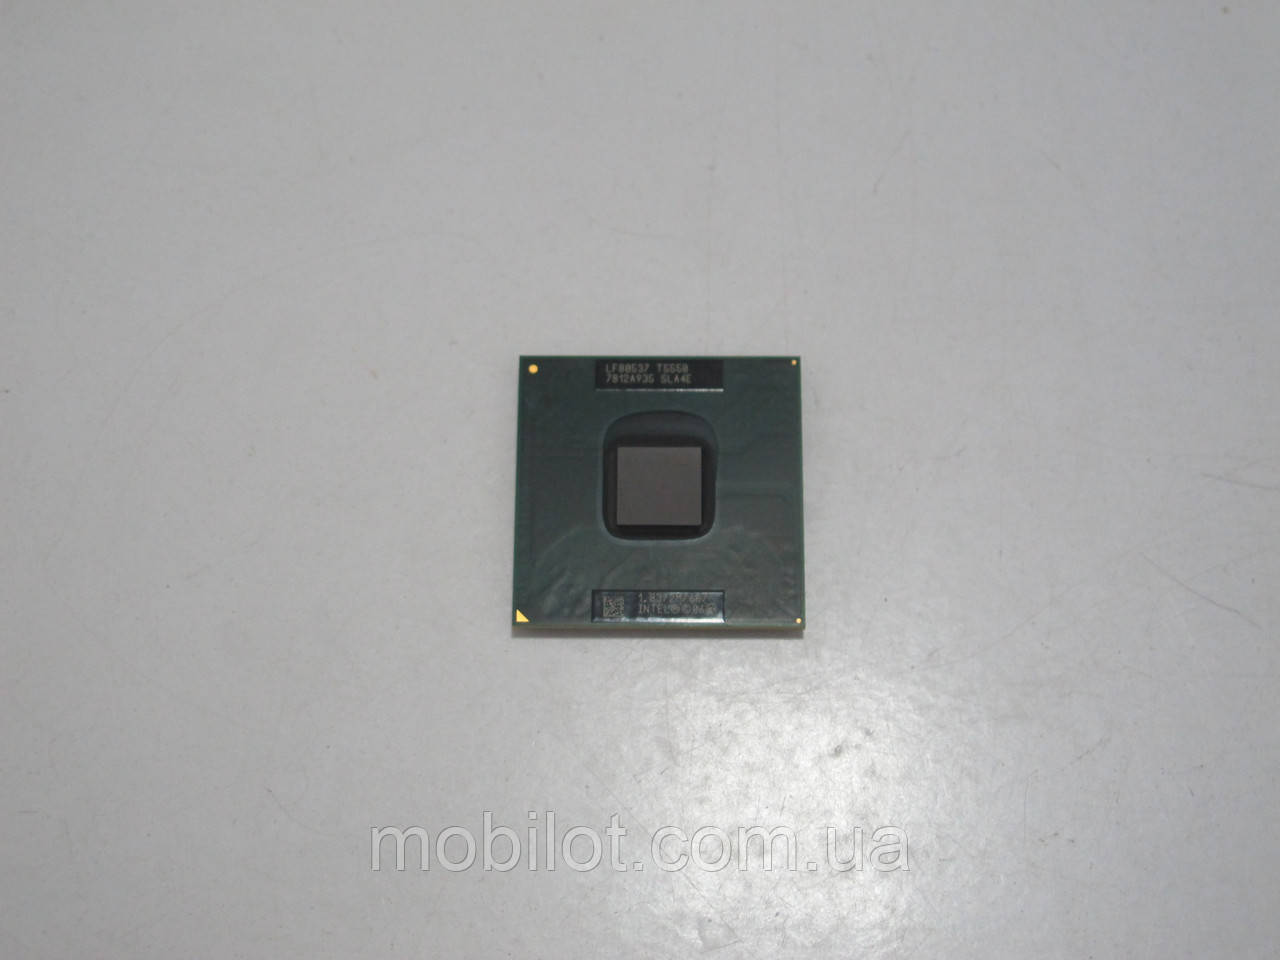 Процессор Intel Core 2 Duo T5550 (NZ-6441) 